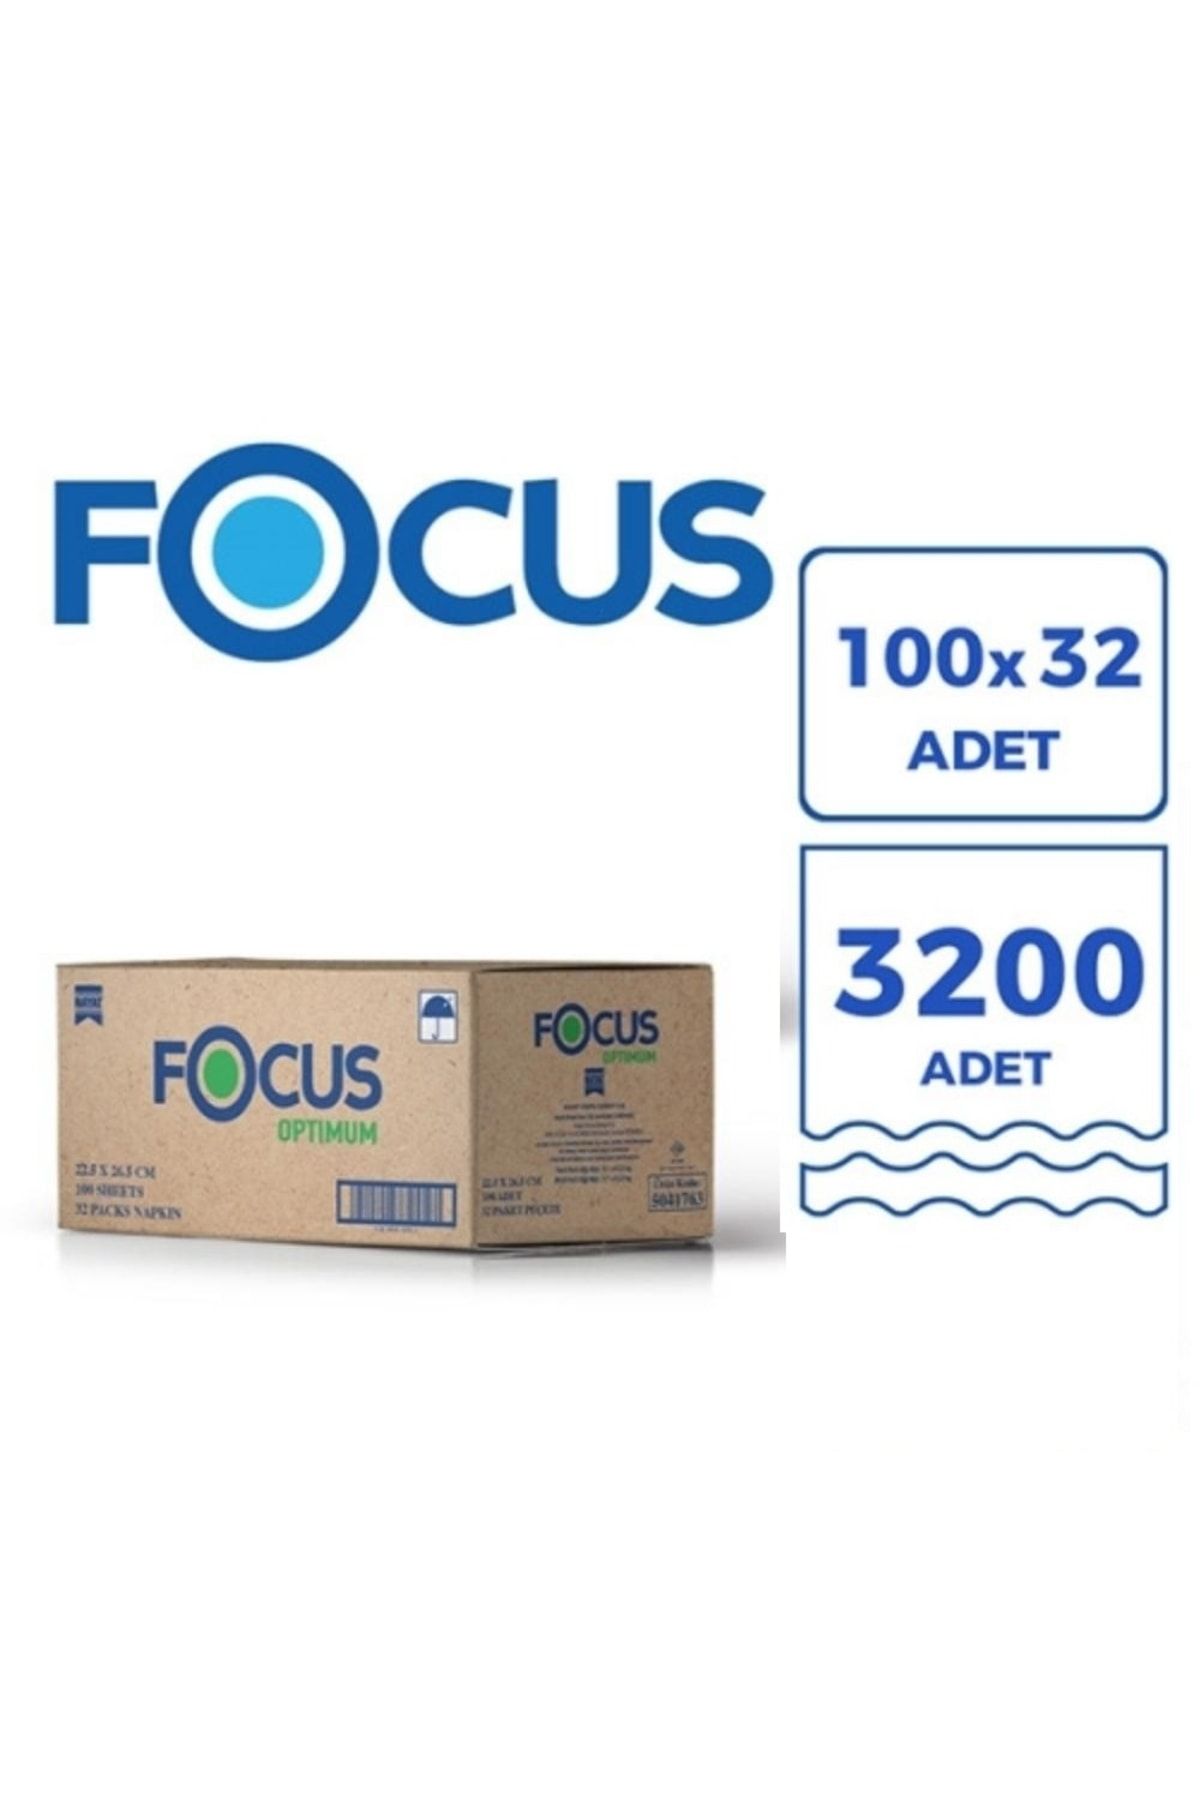 Focus Optimum Peçete 22.5 x 26.5 cm 100'lü 32 Paket 3200'lü